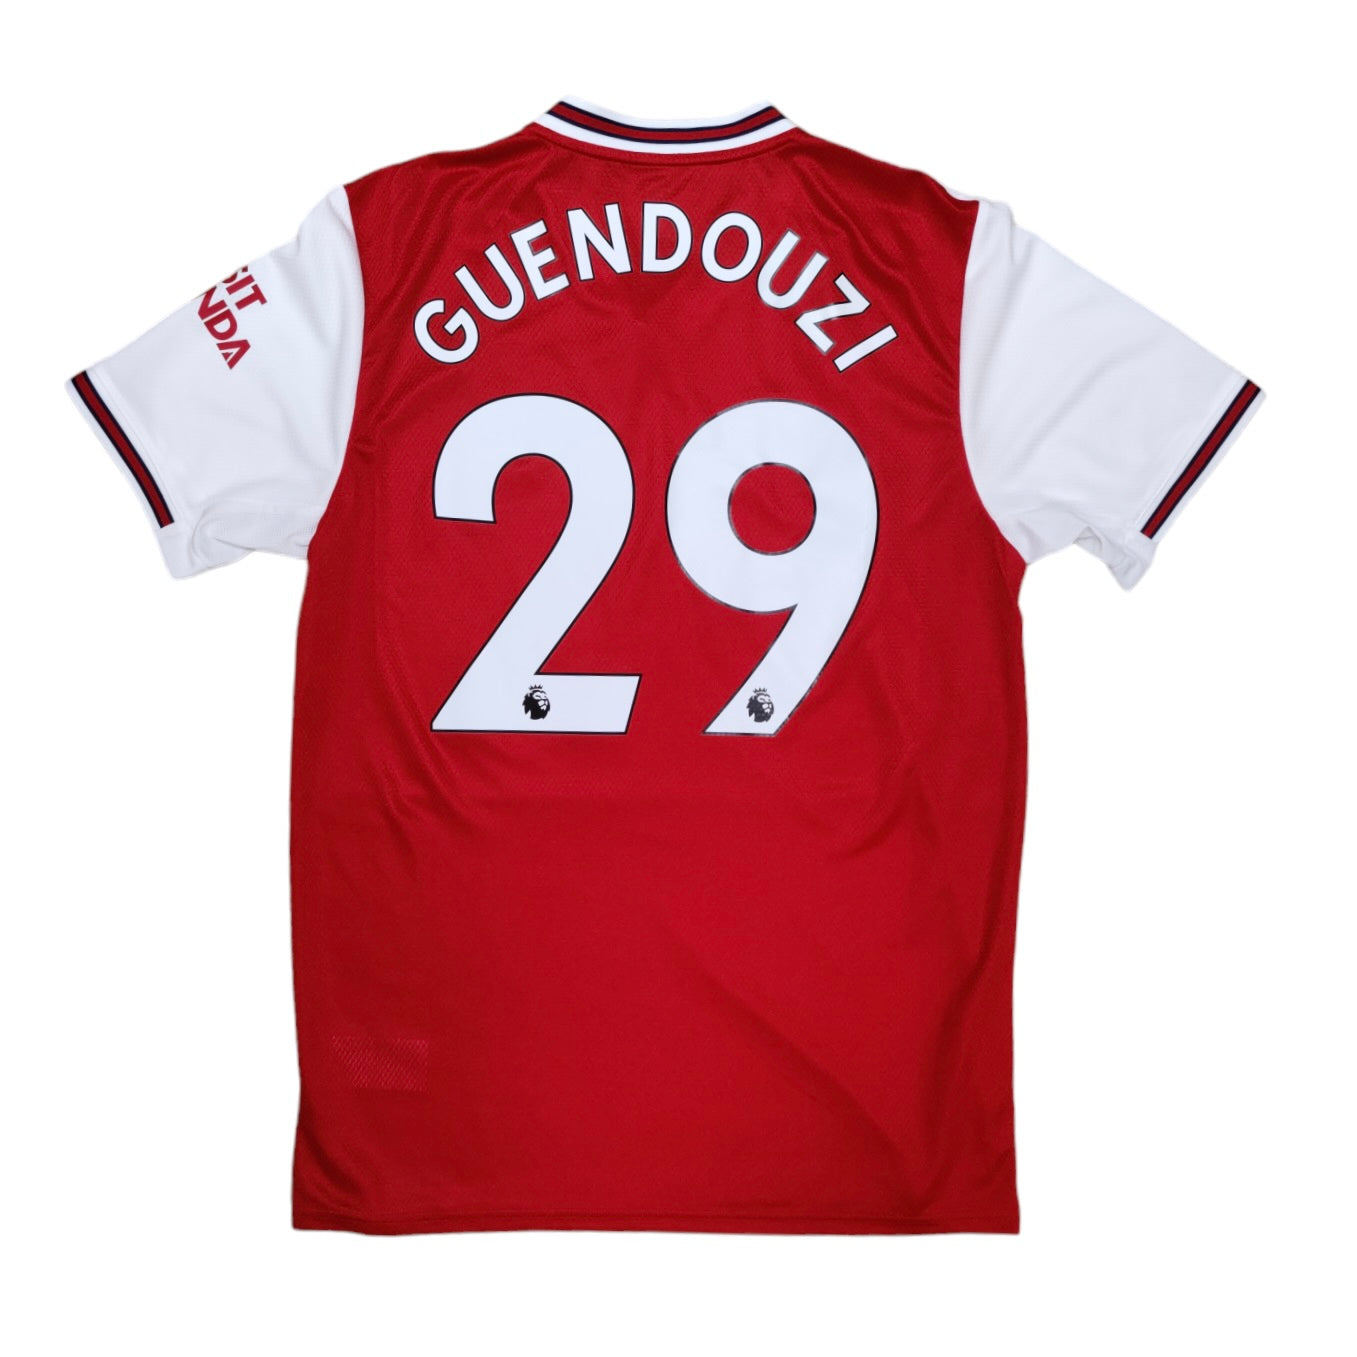 Adidas Arsenal Guendouzi 2019/2020 Home Football Jersey